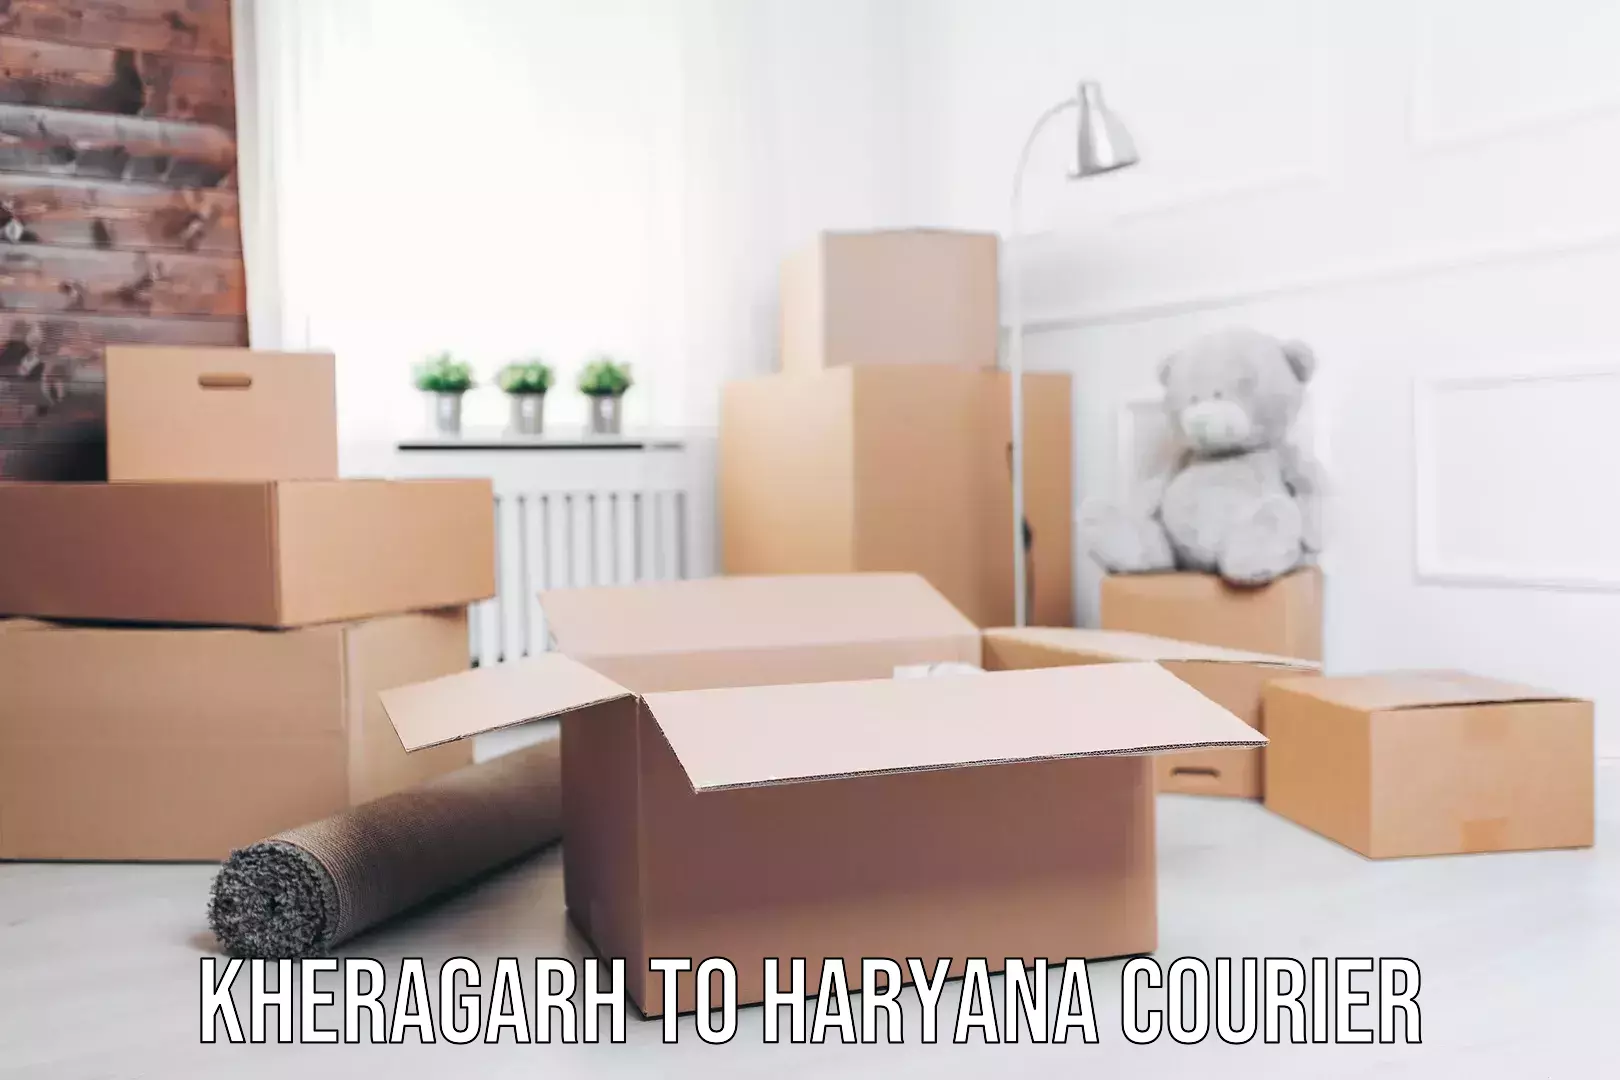 Professional moving company Kheragarh to Haryana